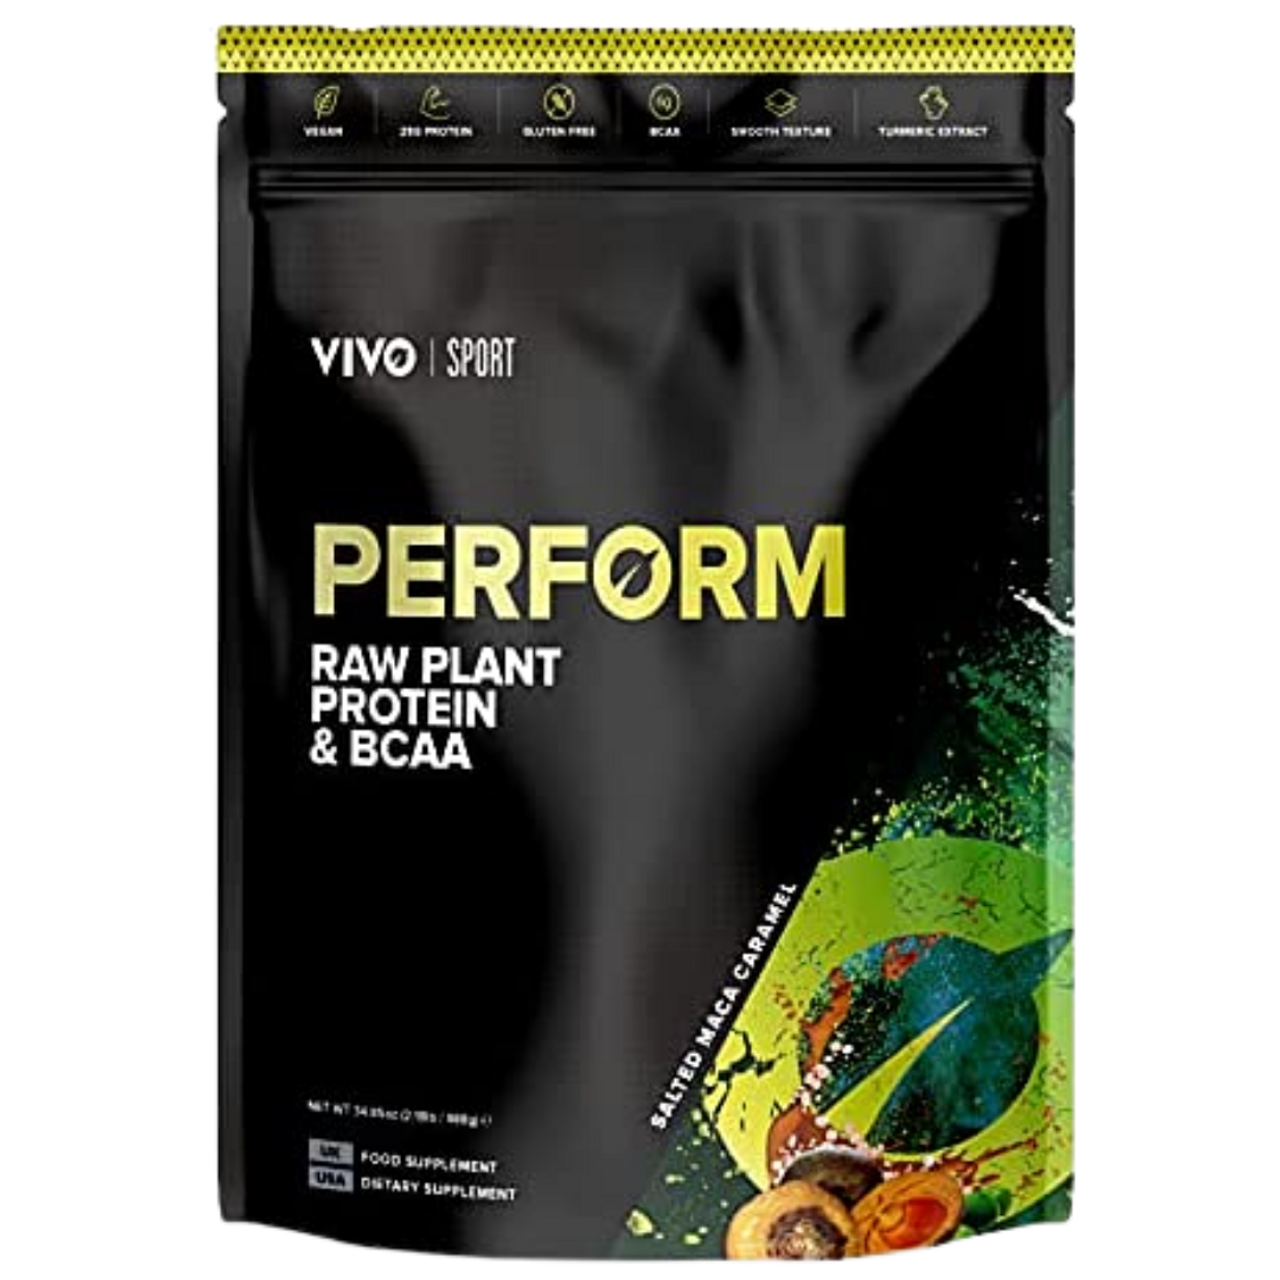 Vivo Perform Raw Plant Protein & BCAA Powder Salted Maca Caramel exp 07-2021 